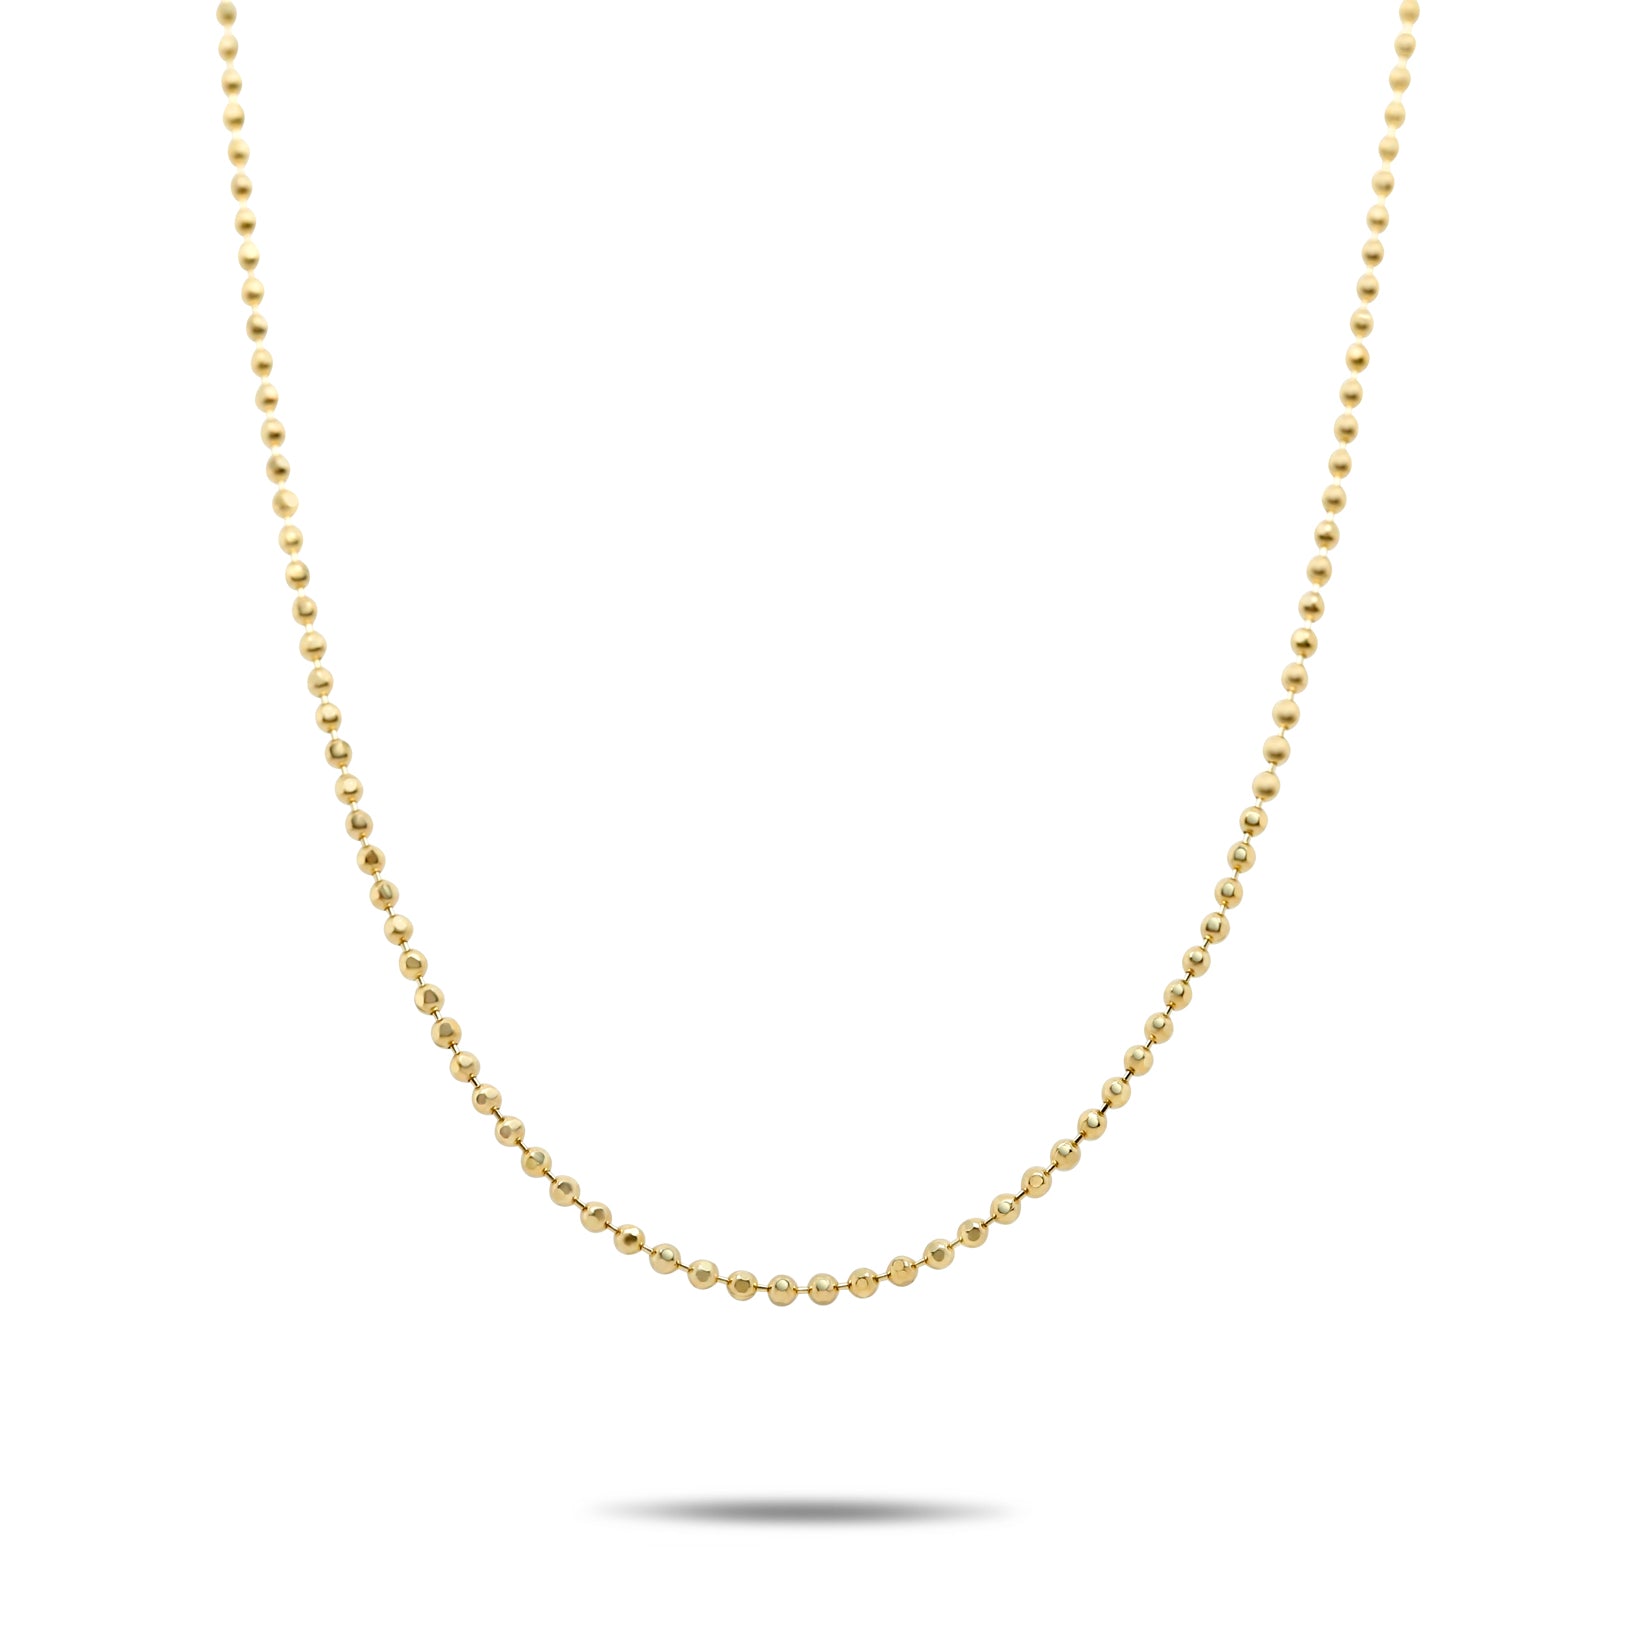 16 inch 14k yellow gold diamond cut bead chain necklace